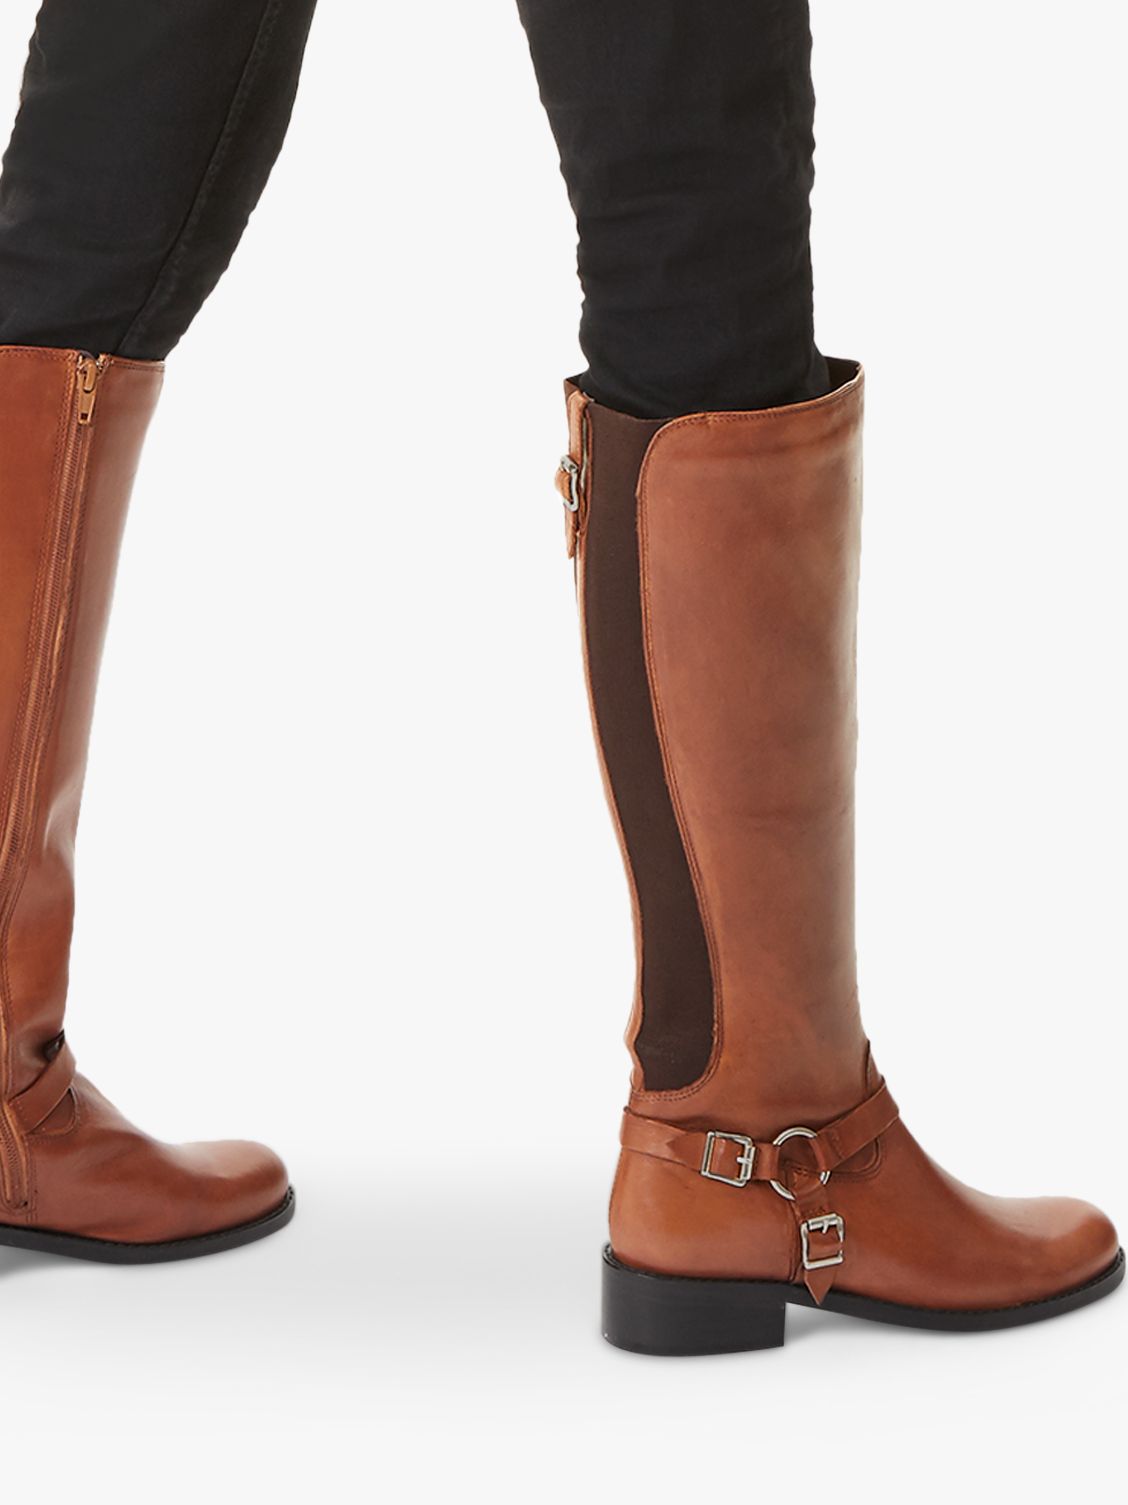 carvela tan knee high boots